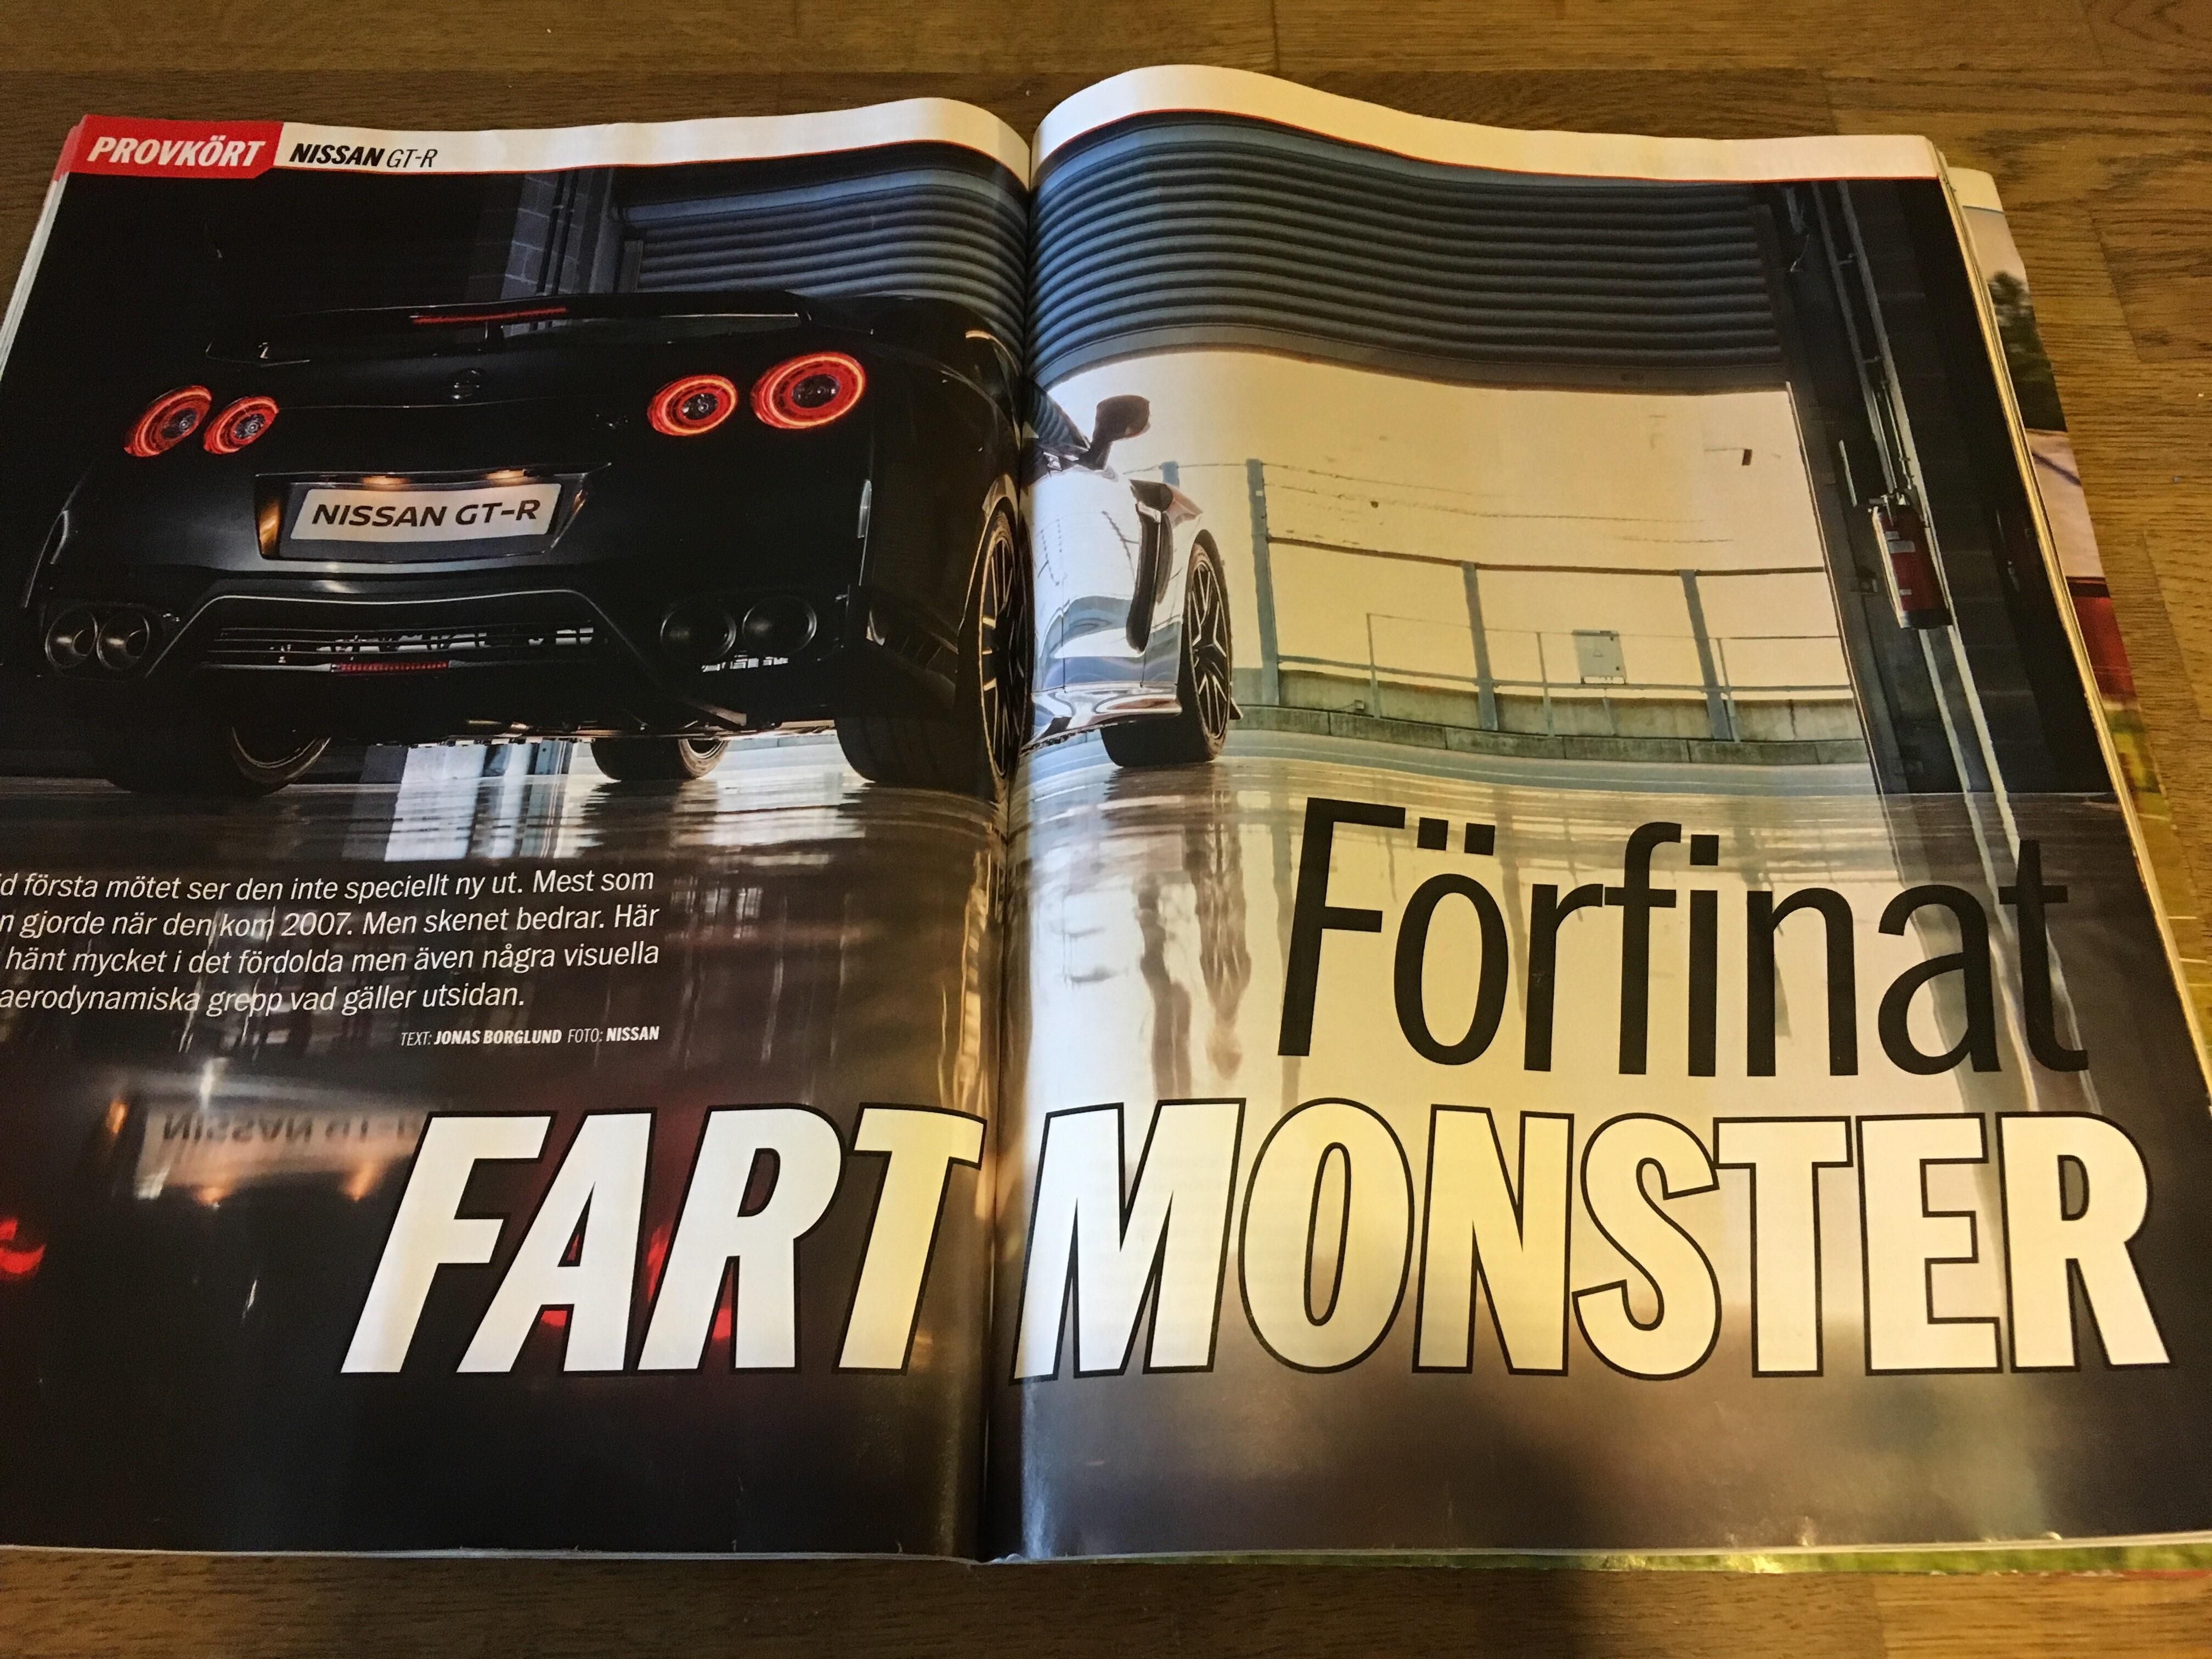 From a swedish car magazine